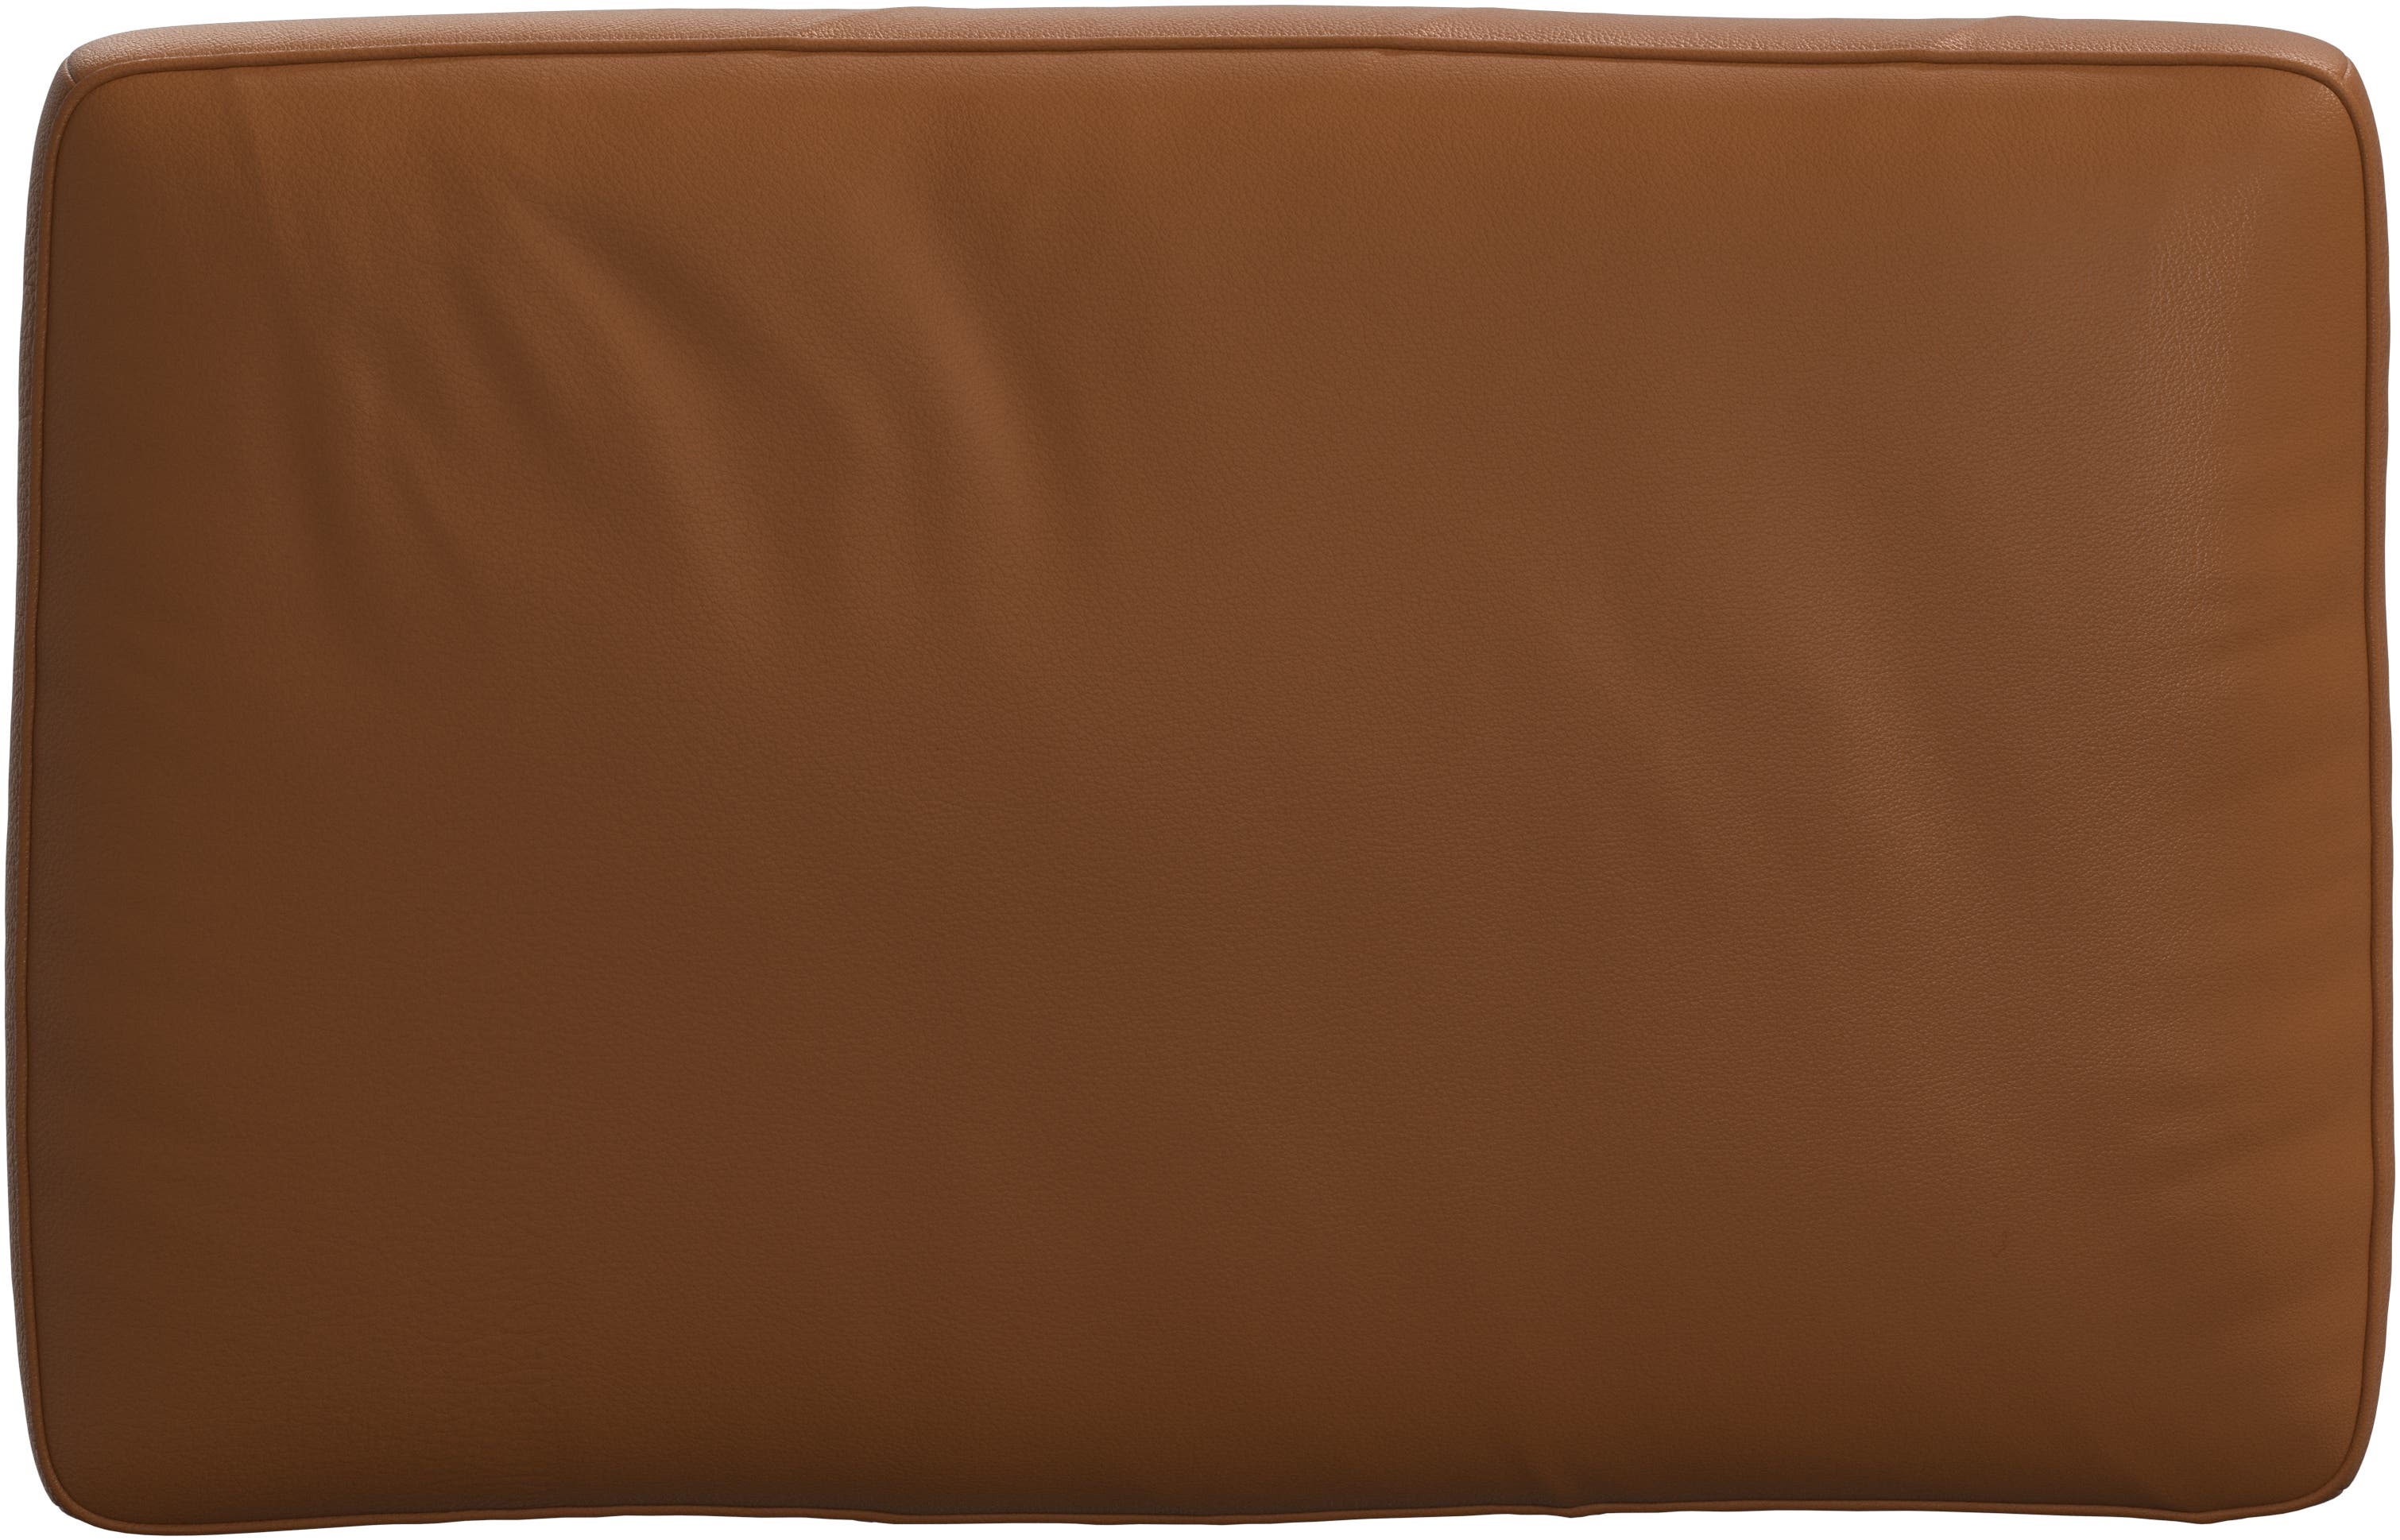 Amsterdam cushion